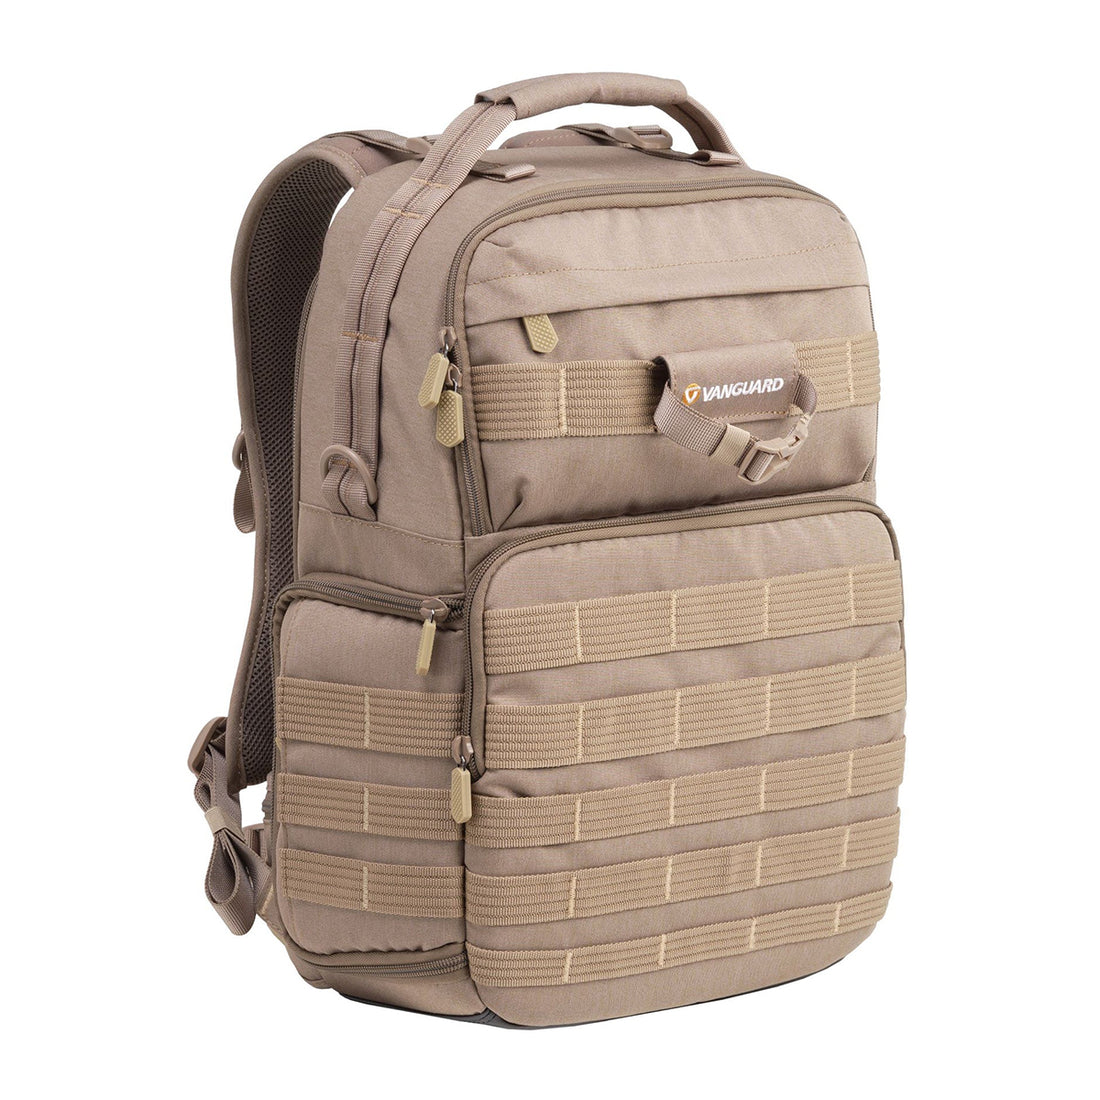 Vanguard VEO Range T45M BG Backpack accommodates professional camera&